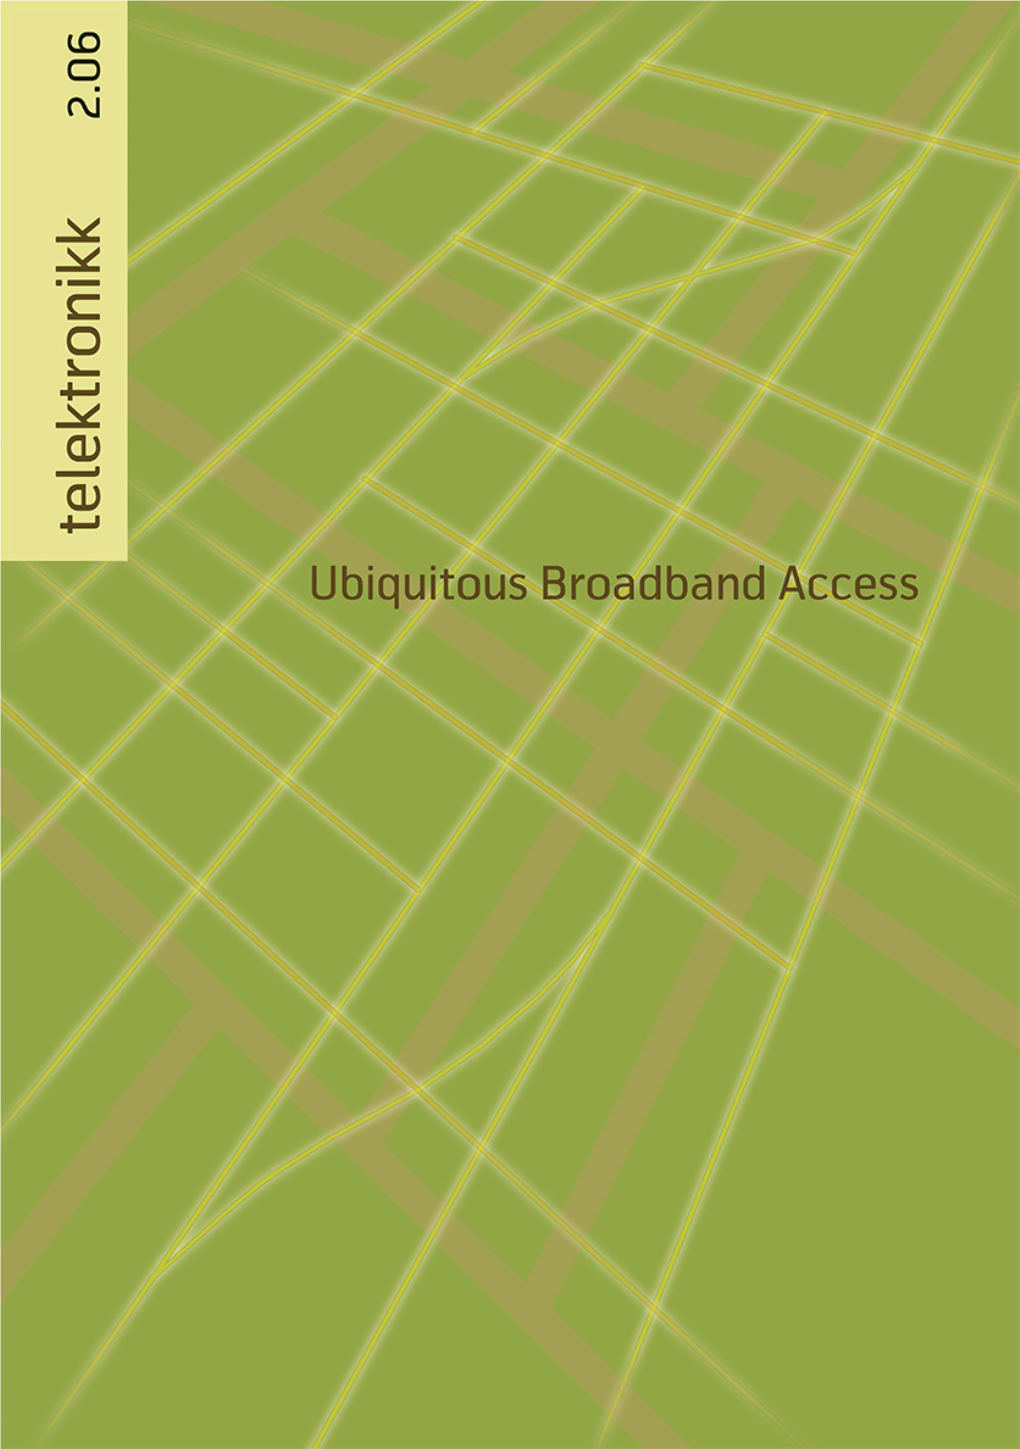 Ubiquitous Broadband Access Volume 102 No